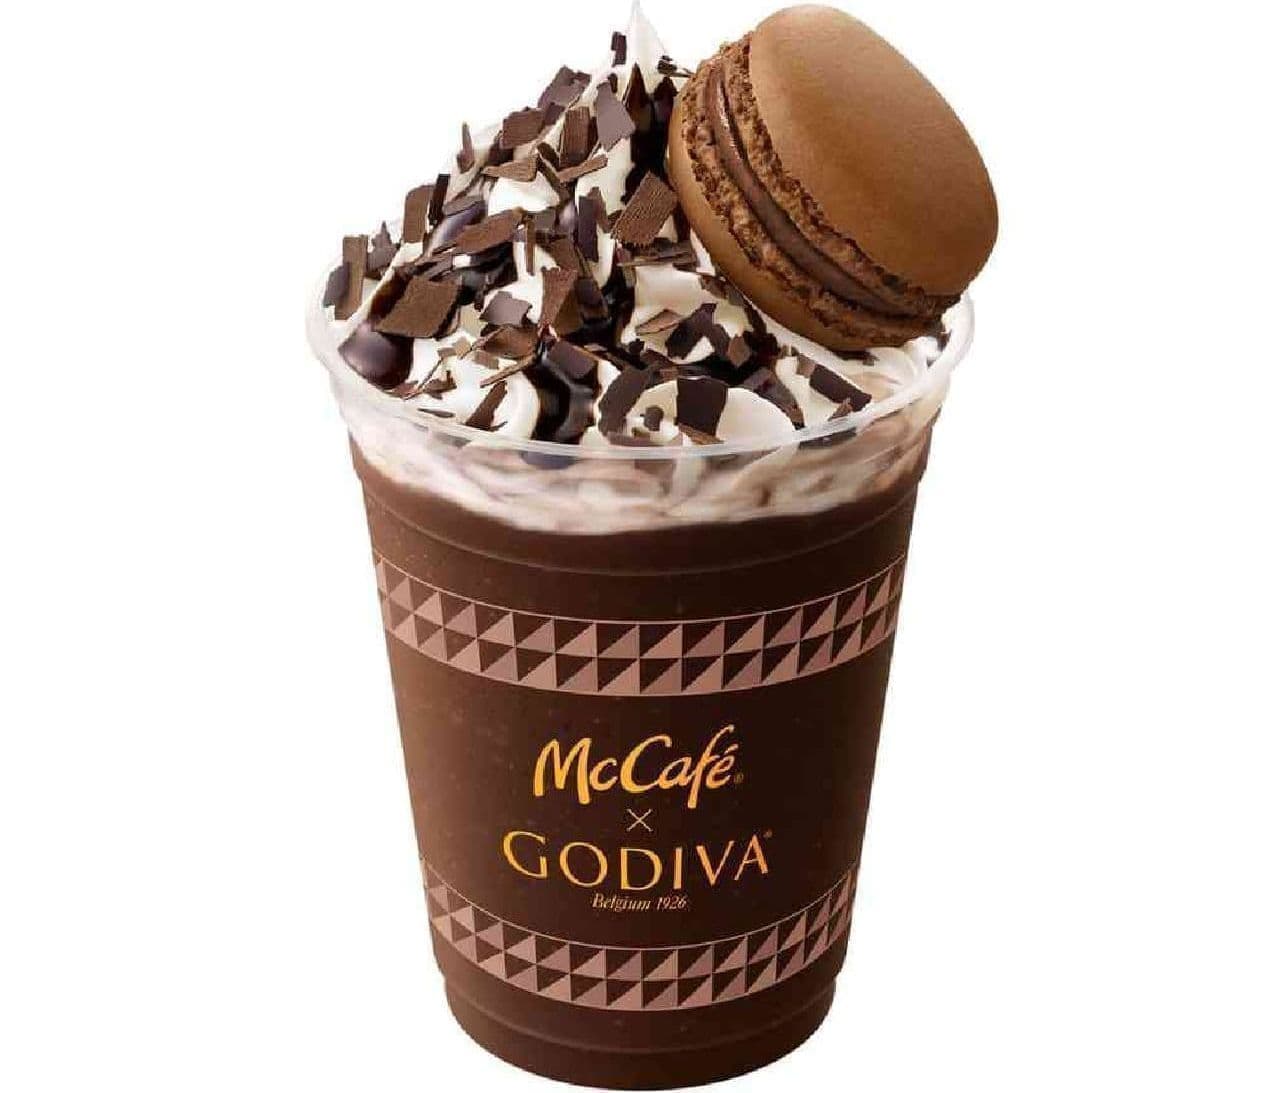 Mac Cafe "Godiva Chocolate Frappe & Macaroon Chocolate